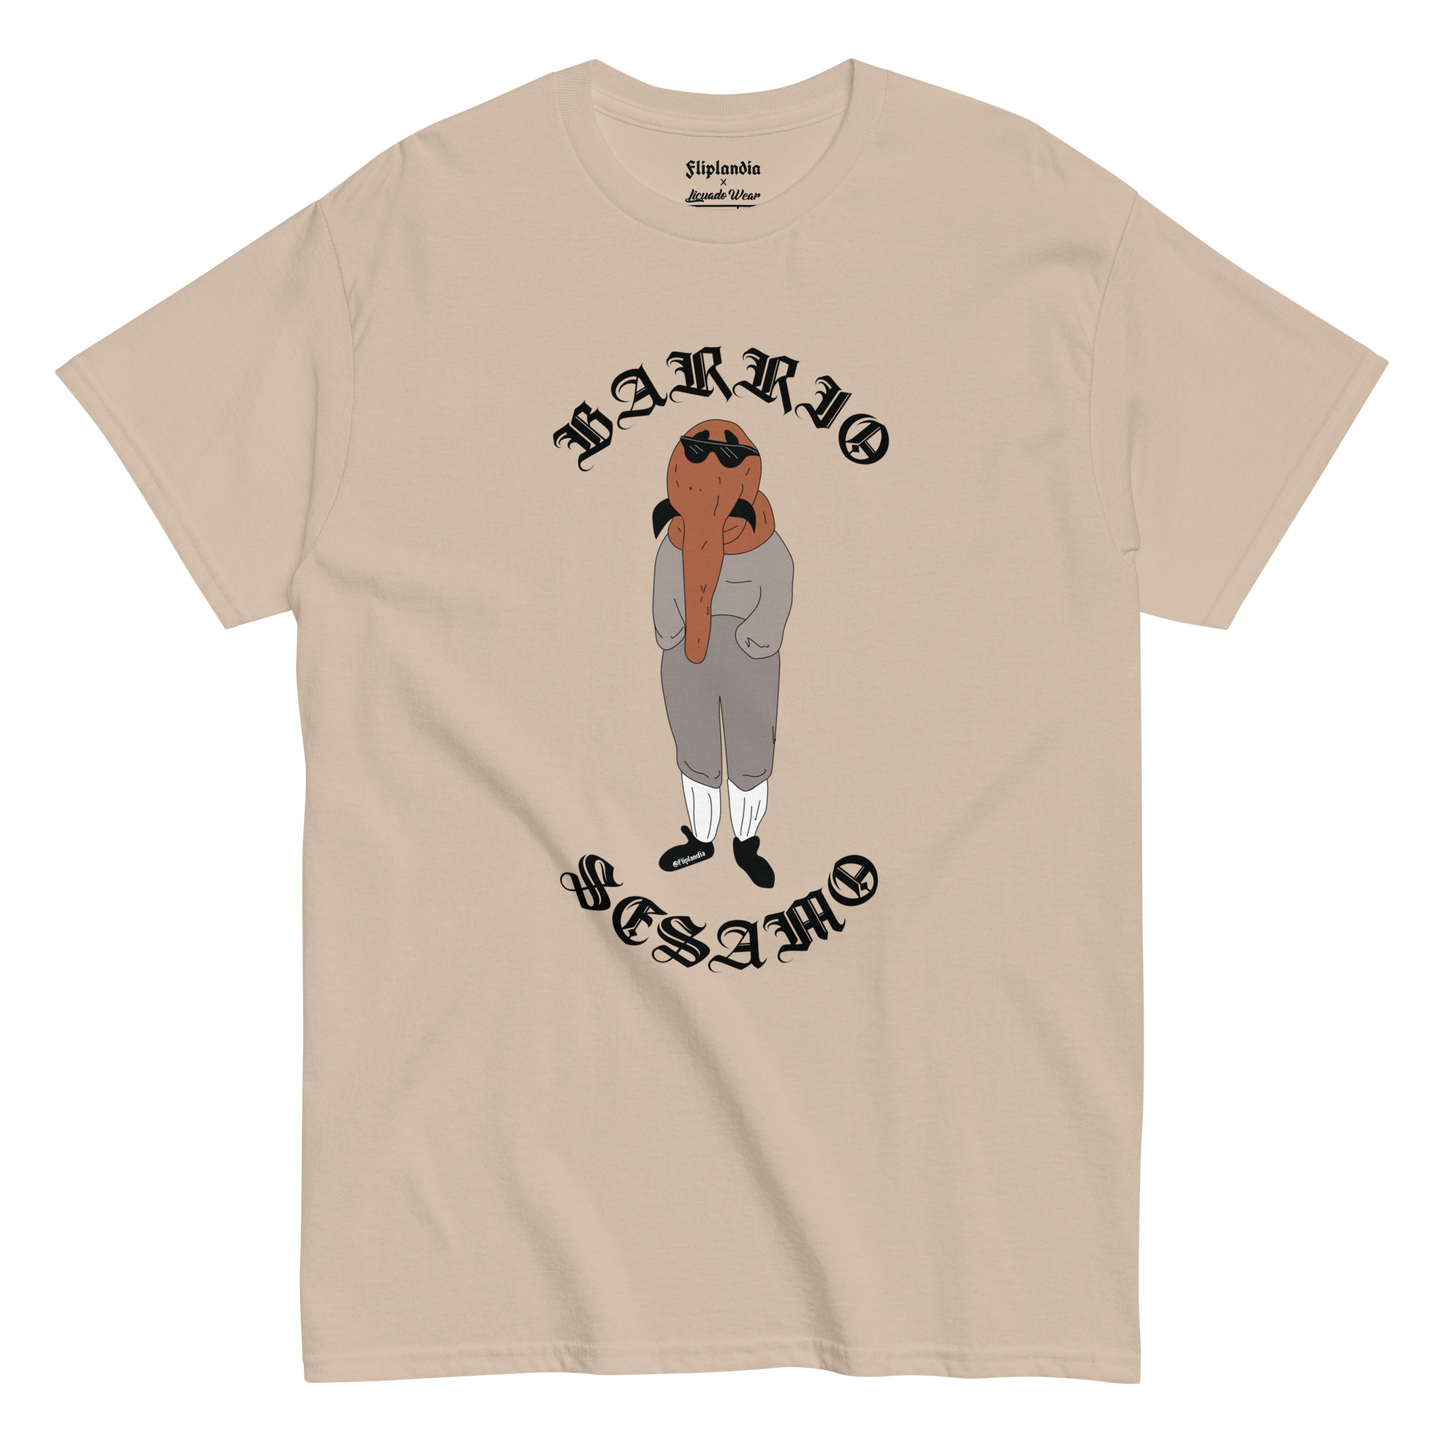 Tronkas - Fliplandia Unisex T-shirt